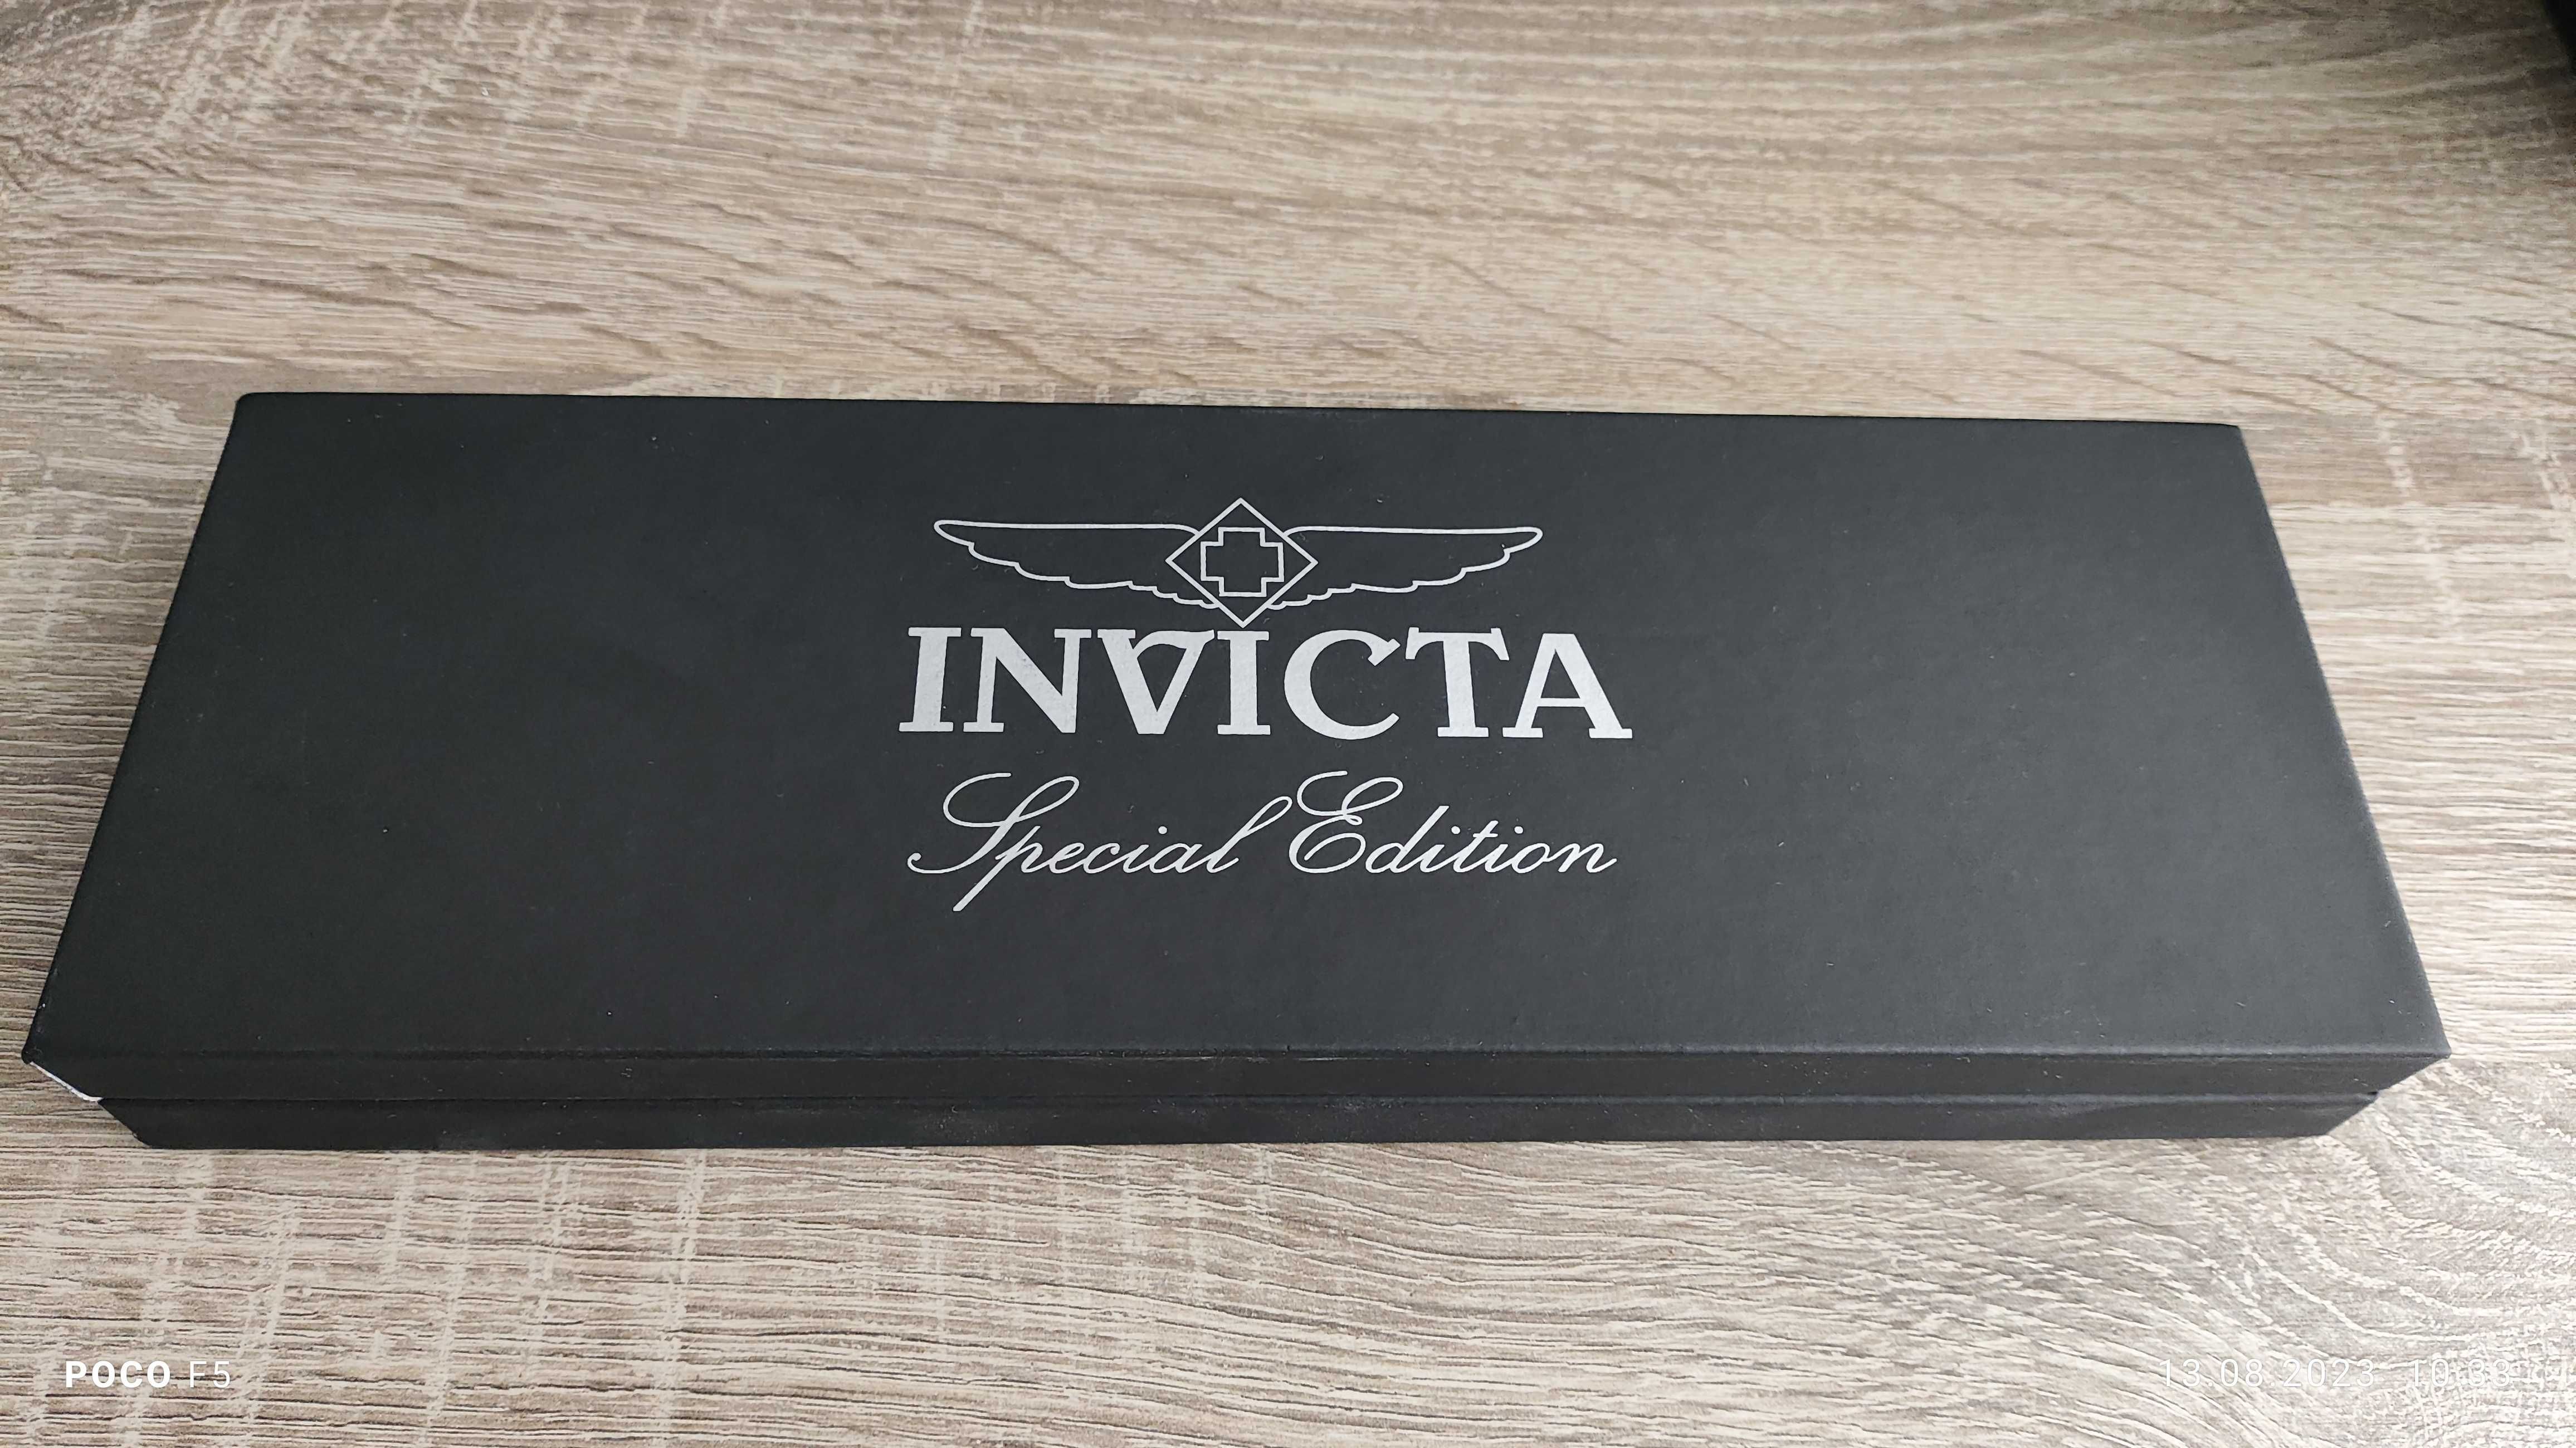 Чоловічий годинник Invicta Specialty 14330